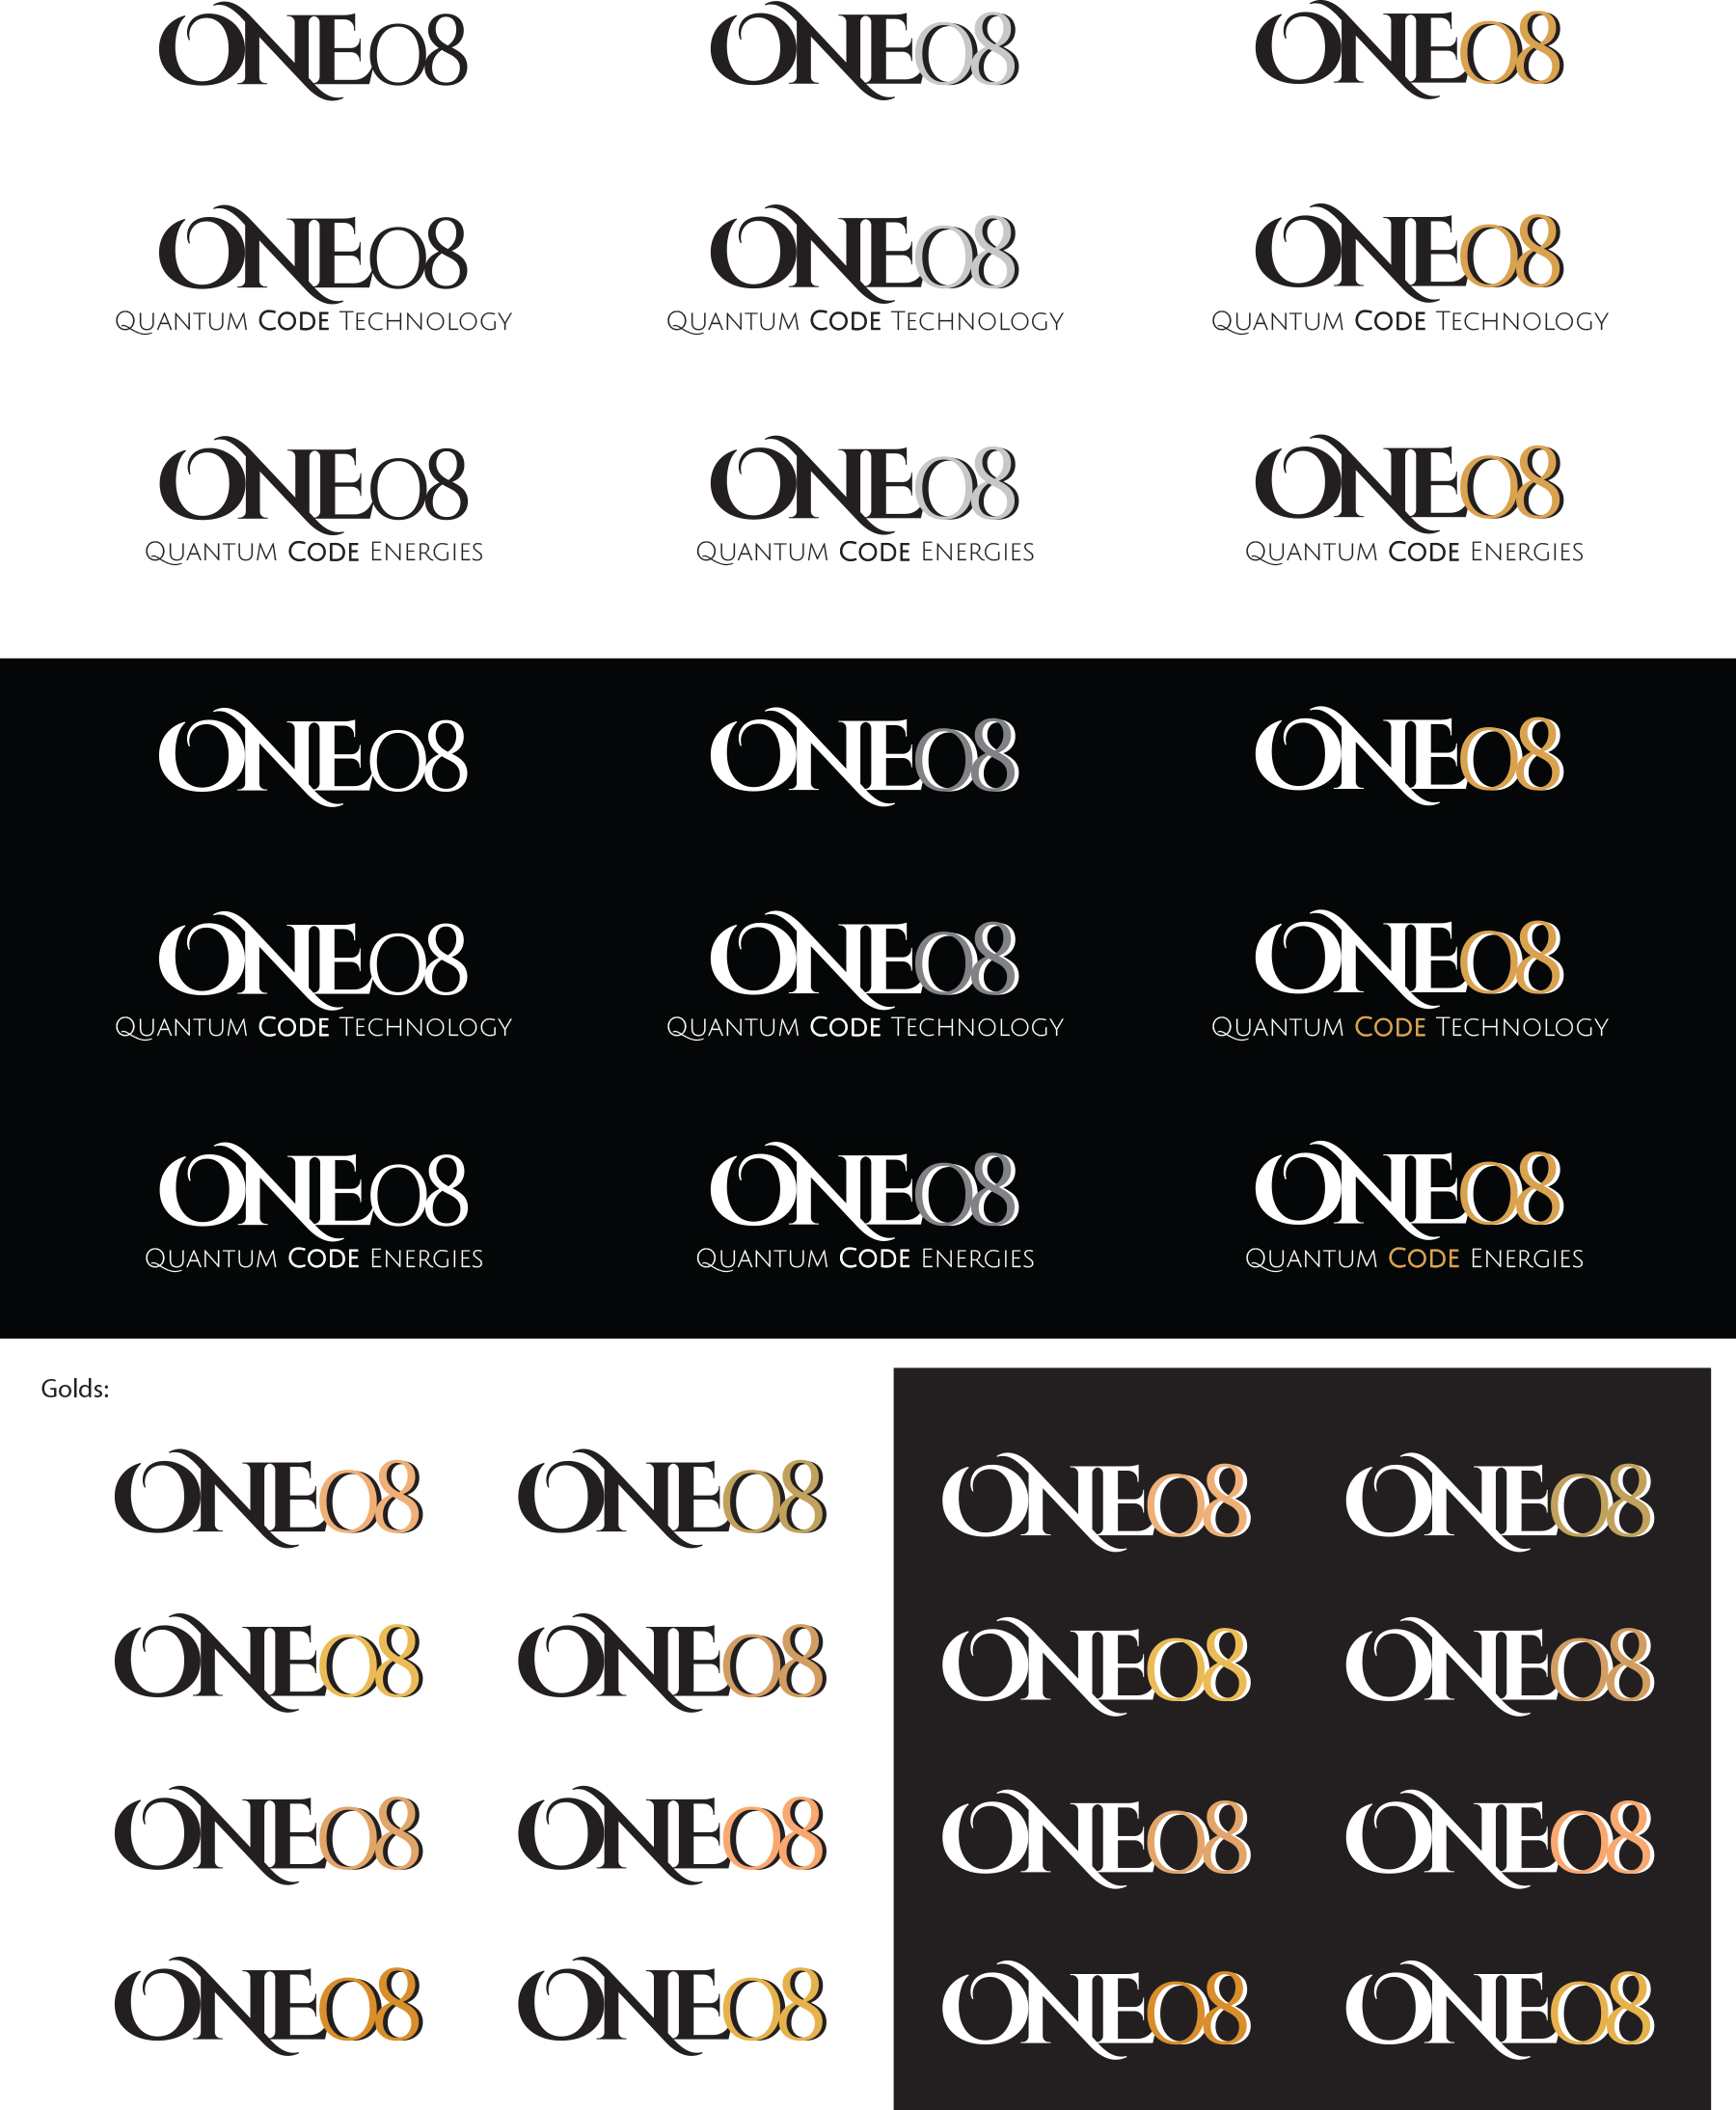 One08 Logo Design